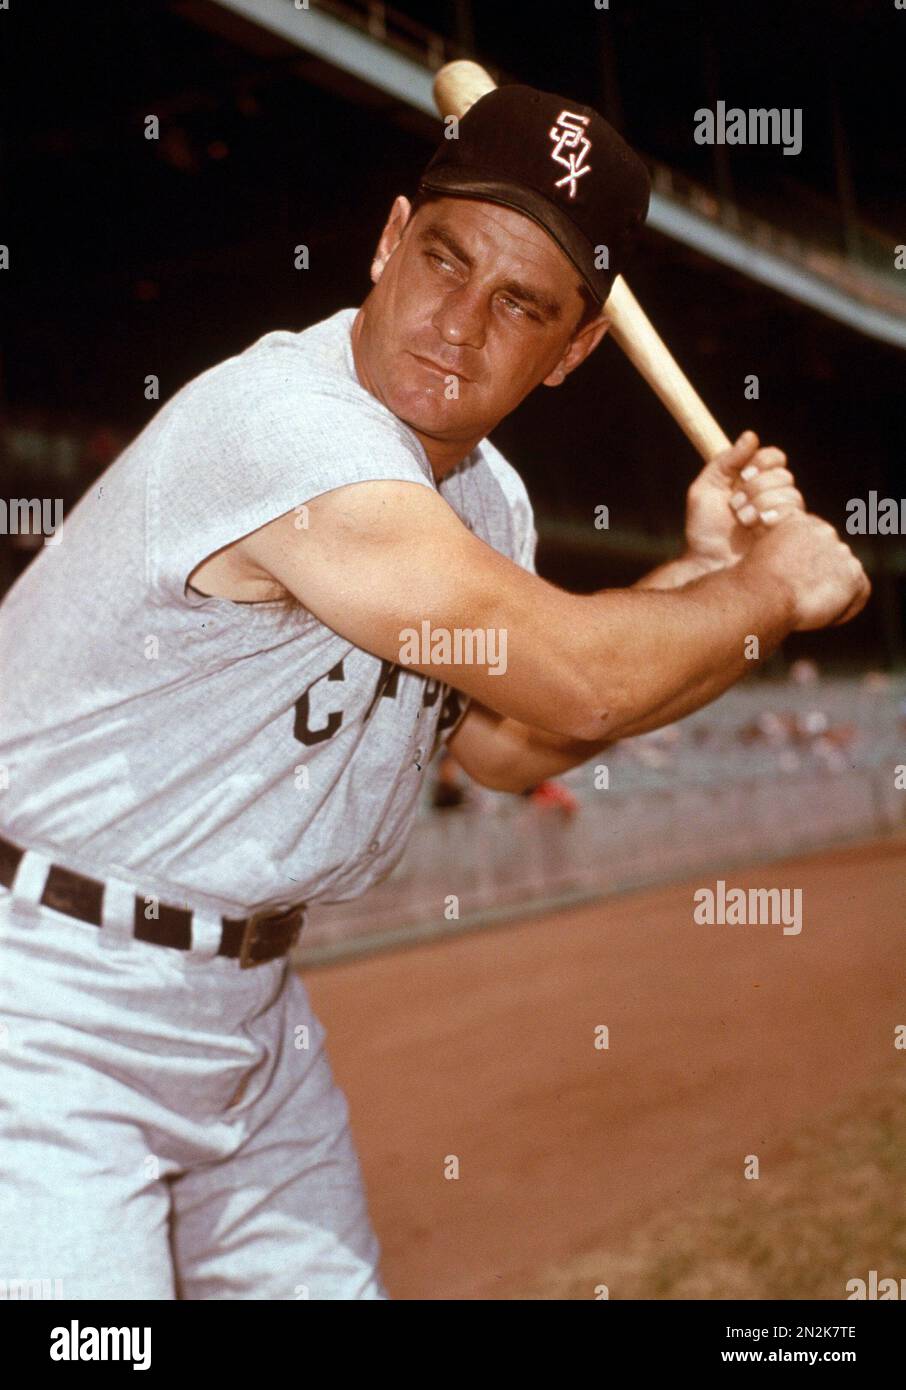 1959 White Sox